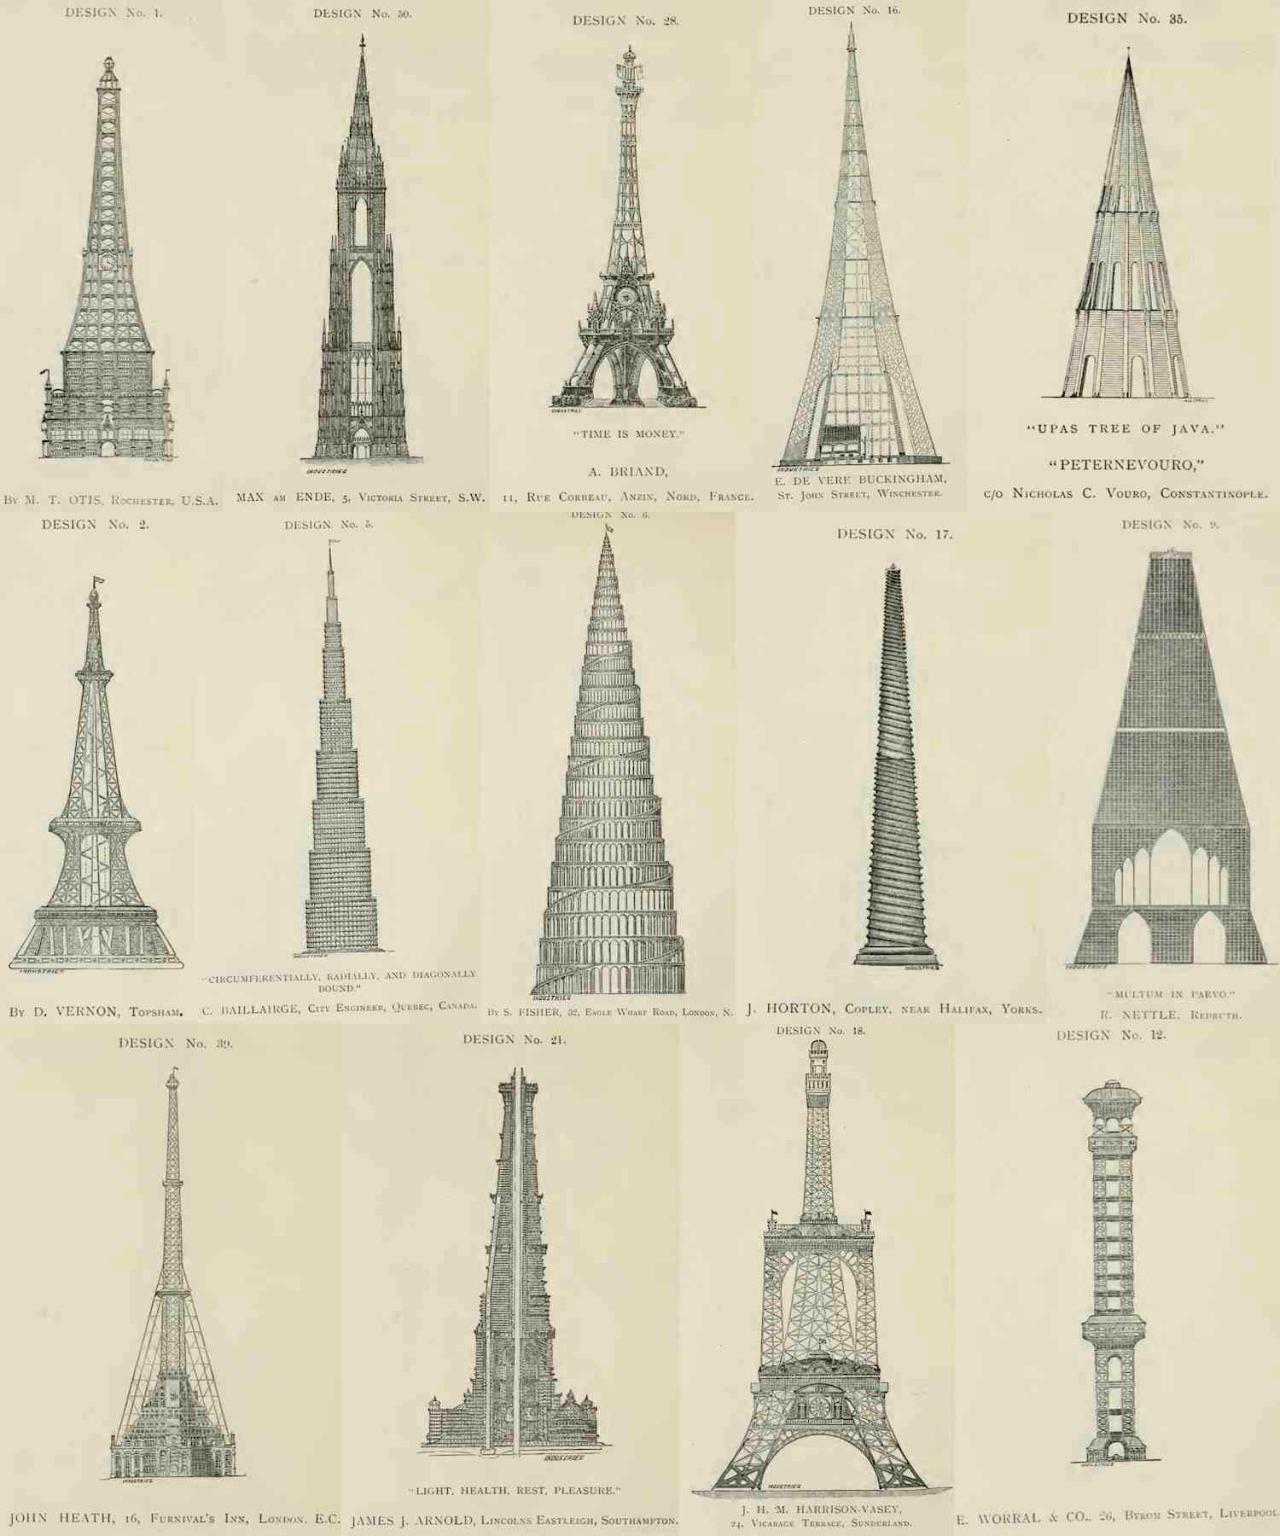 Eiffel tower sex position